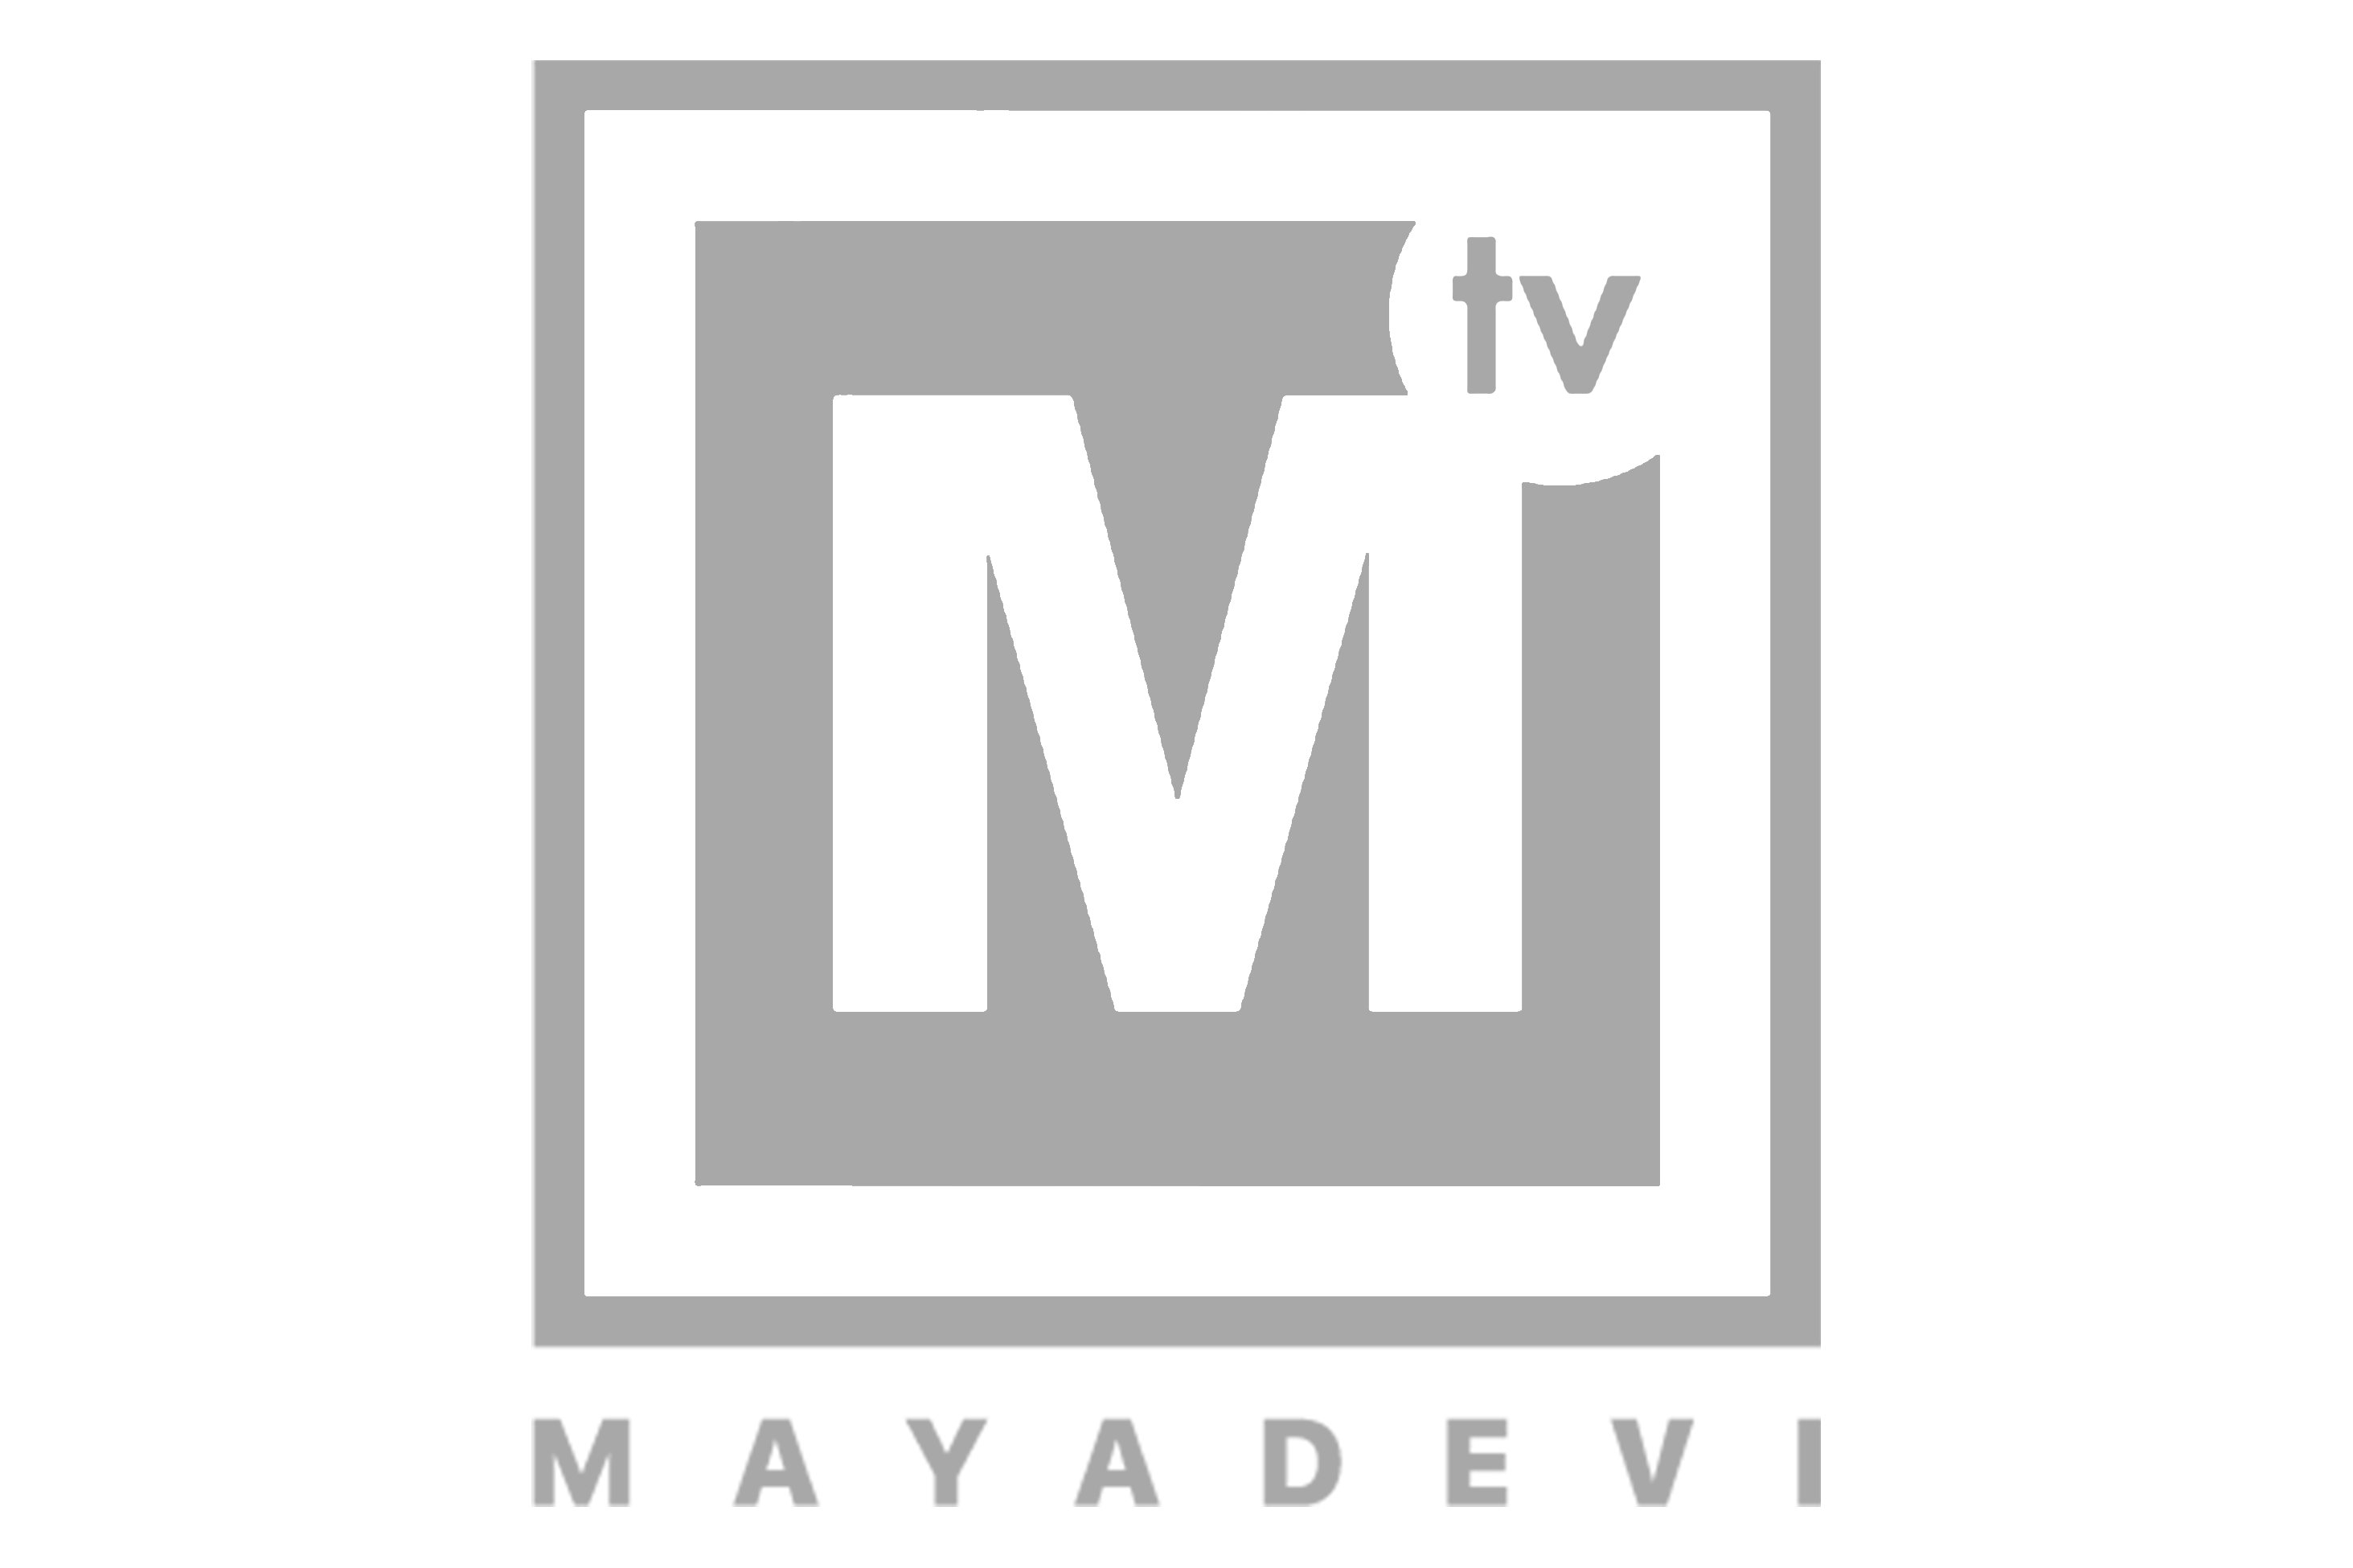 Mayadevi TV